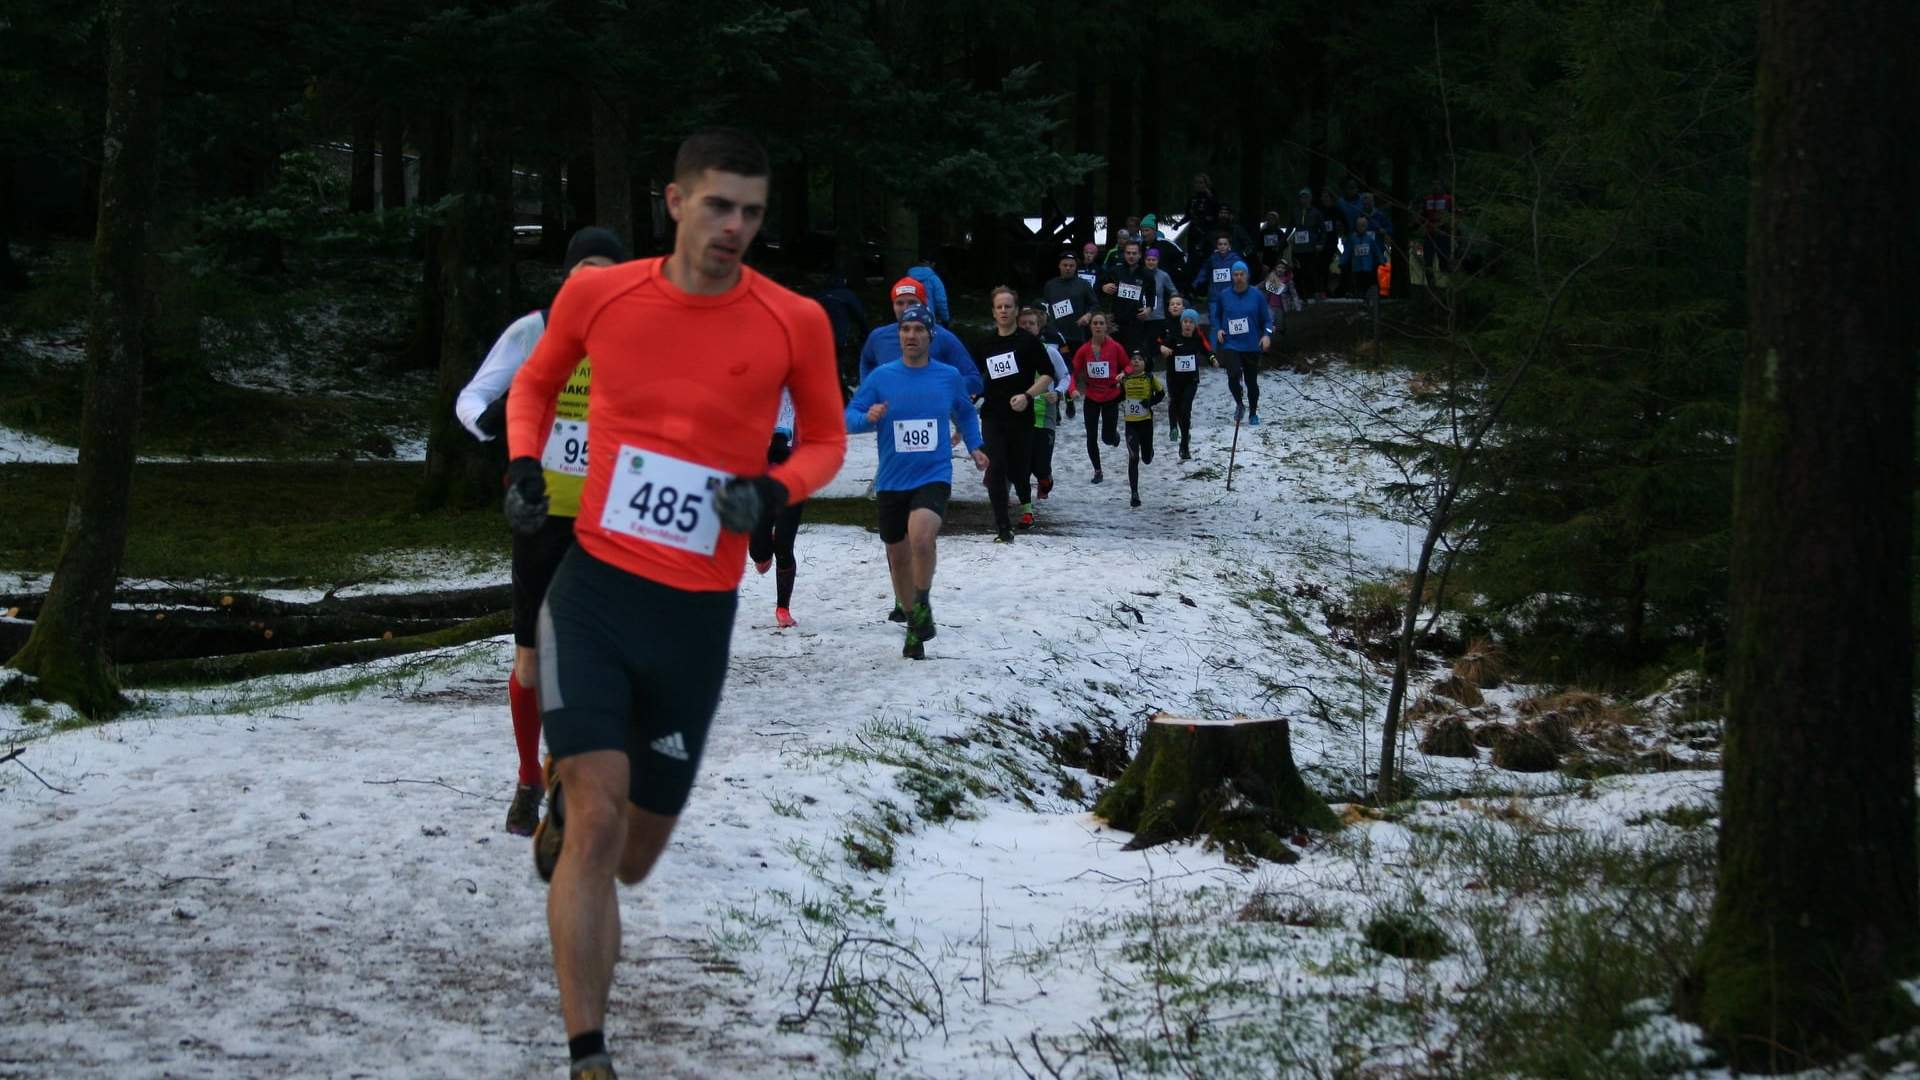 Deltagere løper gjennom et snølagt Rogaland Arboret under Arborettrimmen i Sandnes